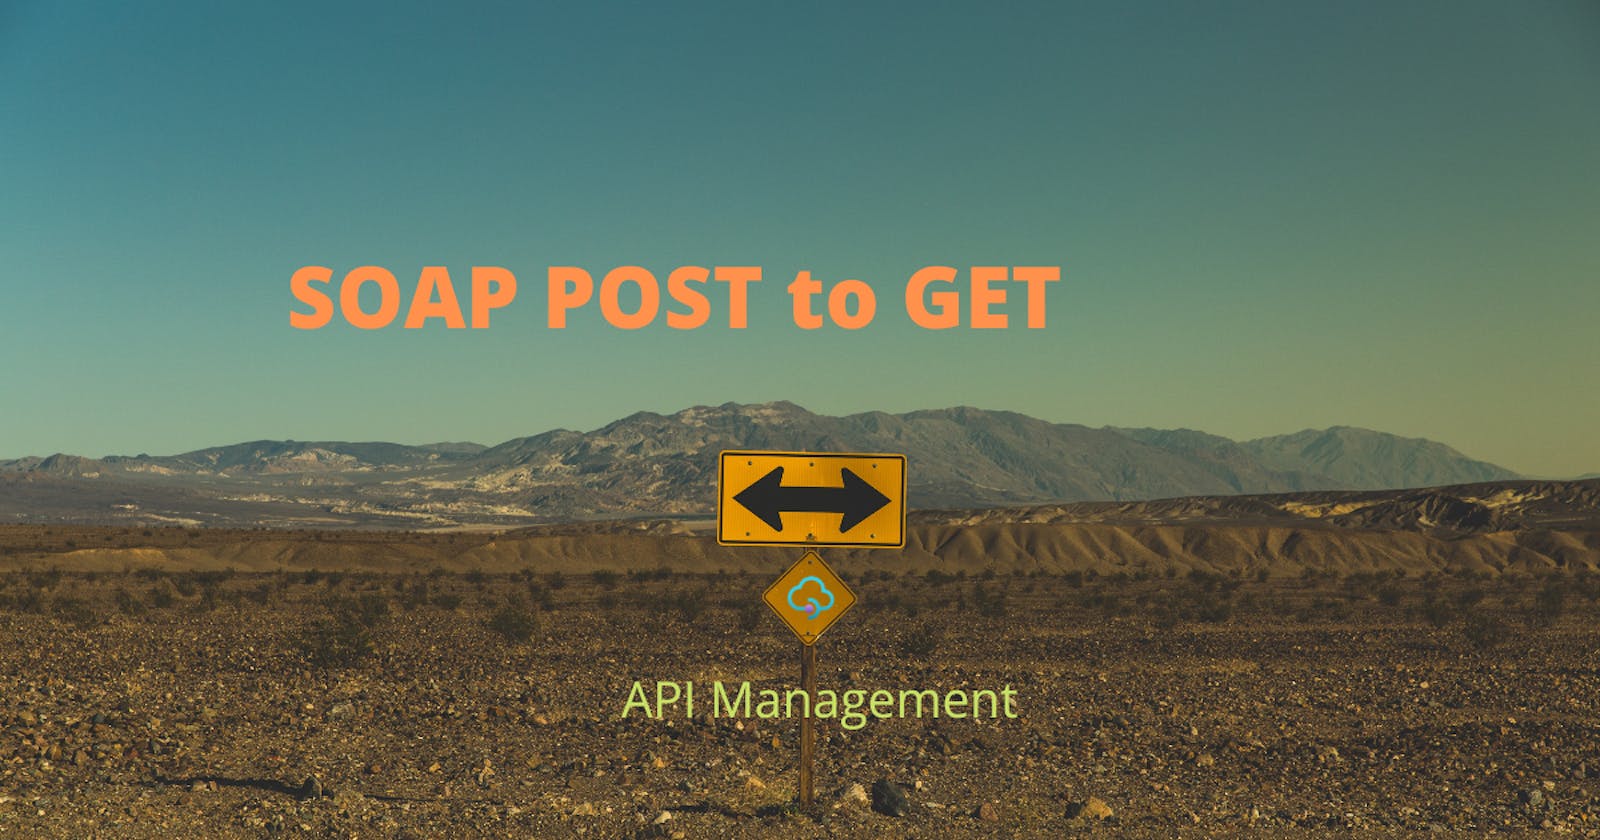 API Management - Convert SOAP POST to GET